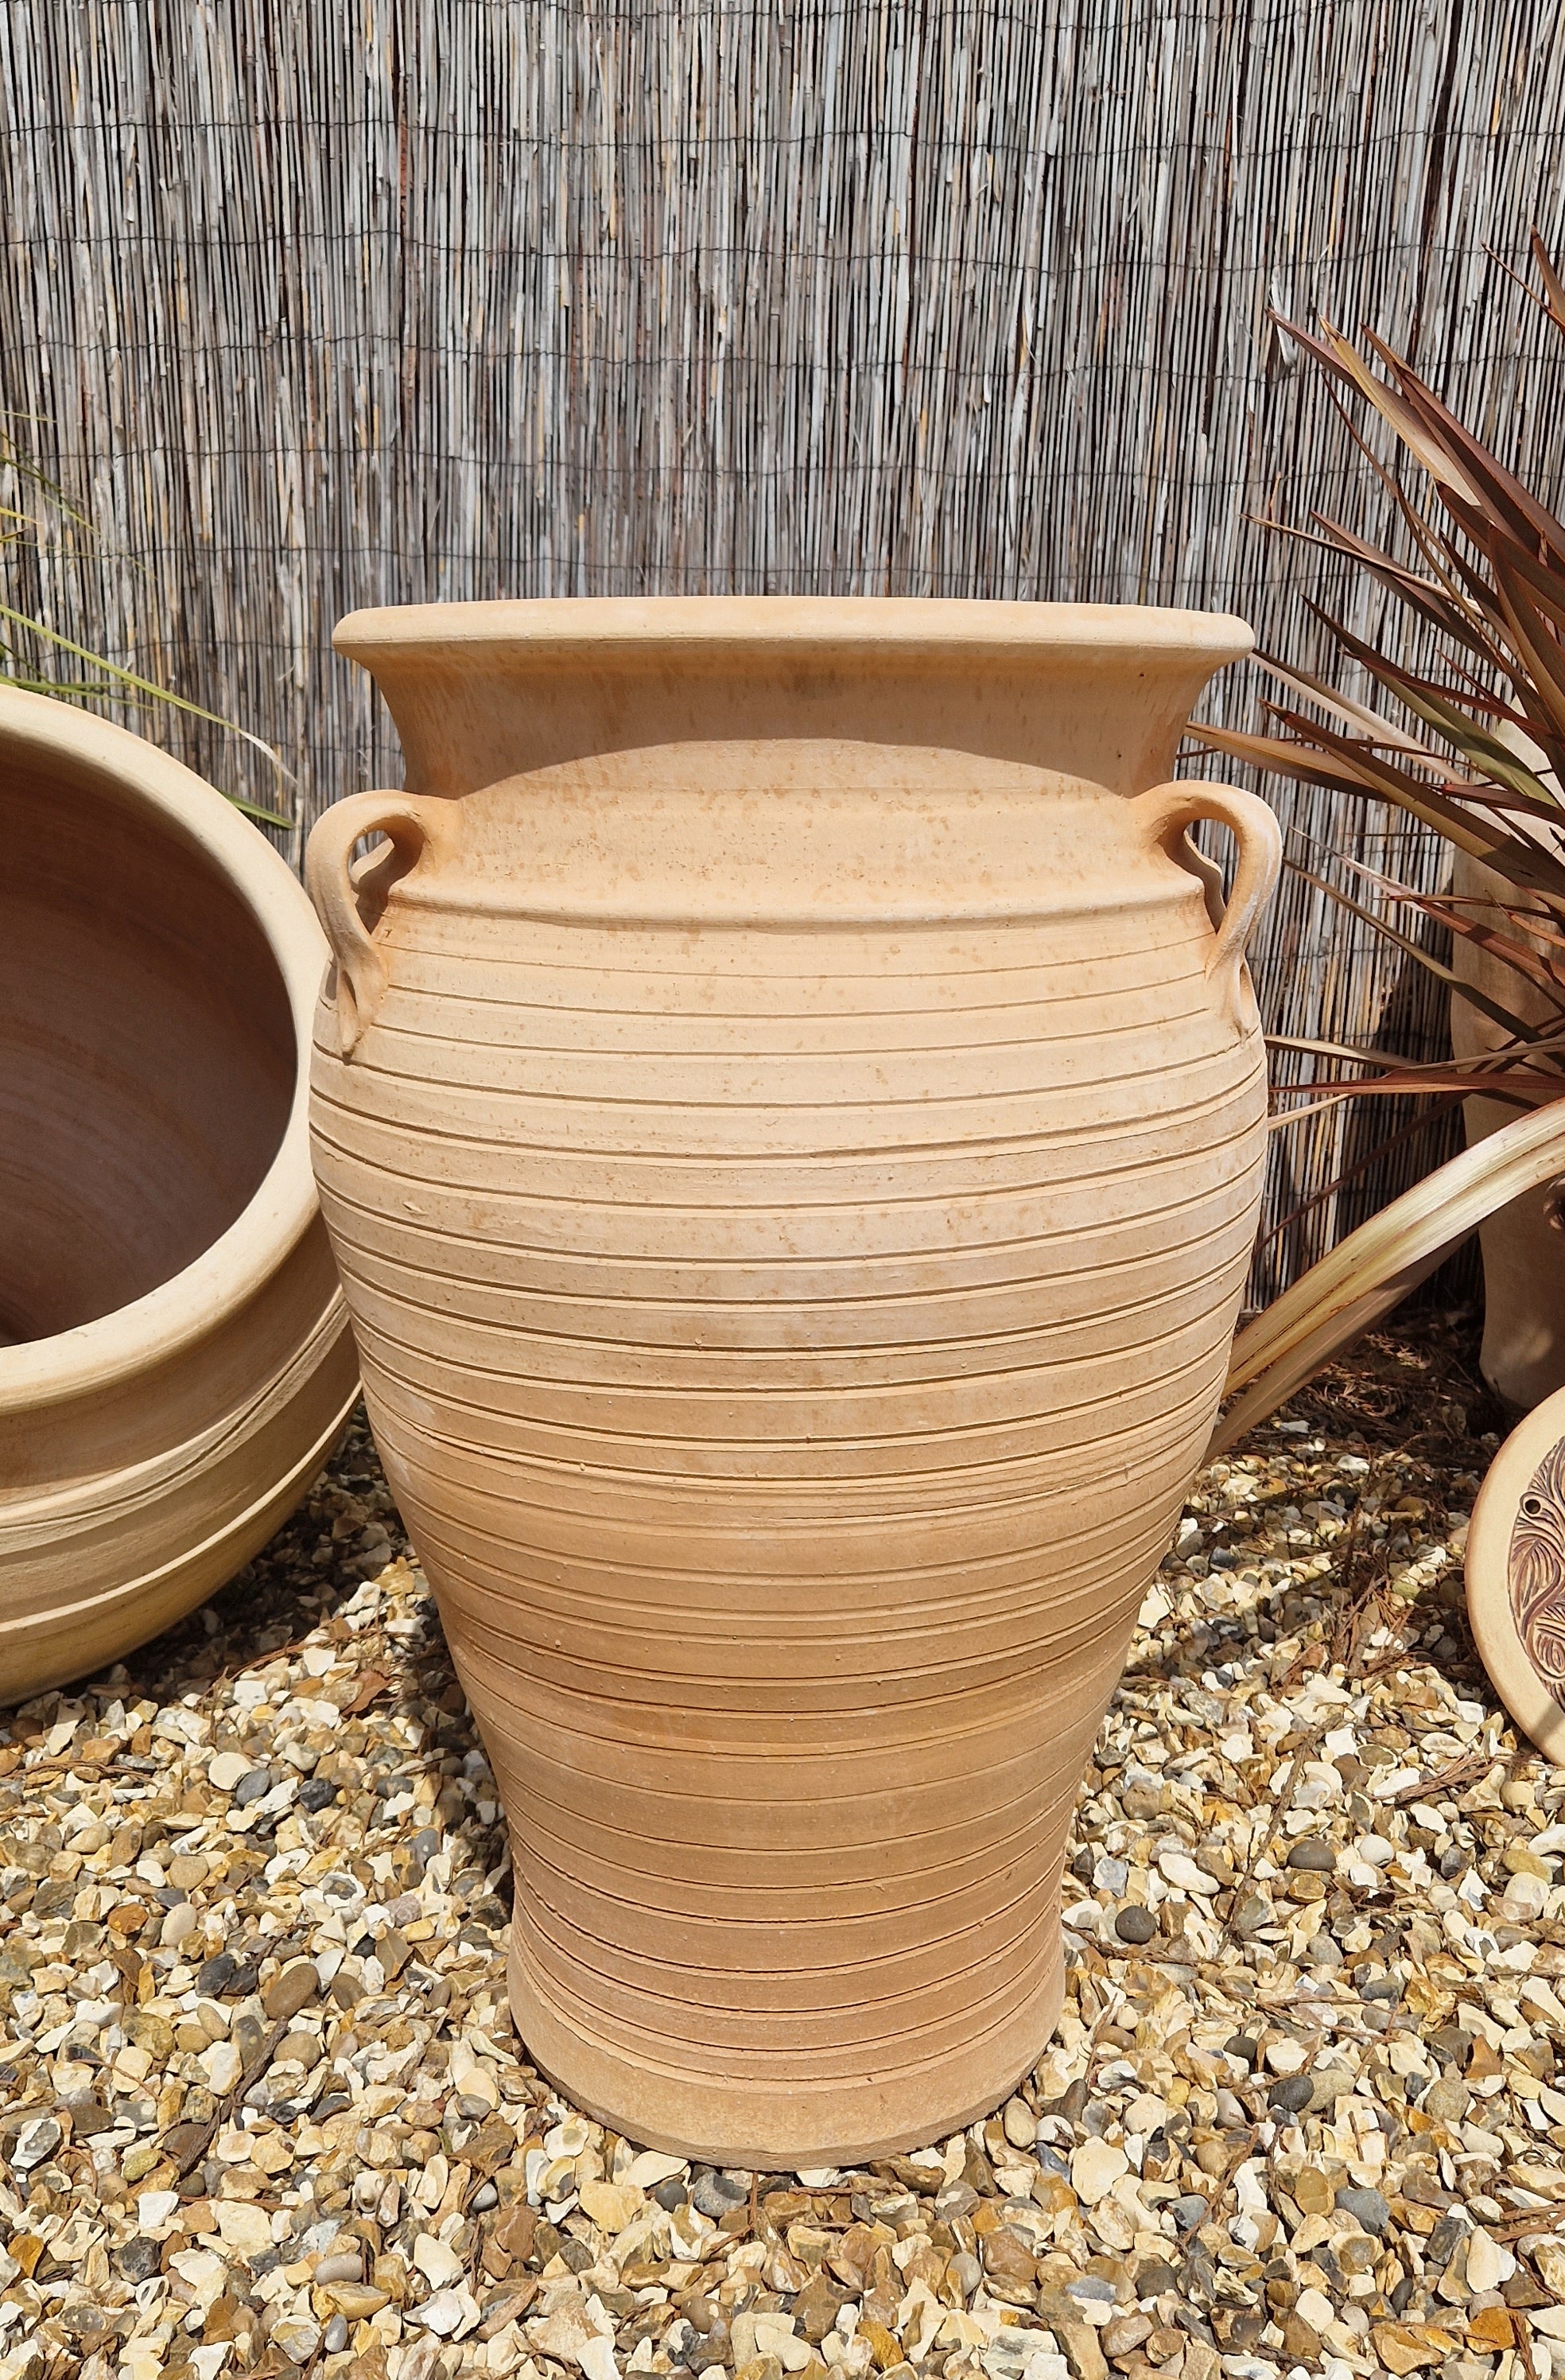 Apollo Cretan Terracotta Pot - Tom's Yard